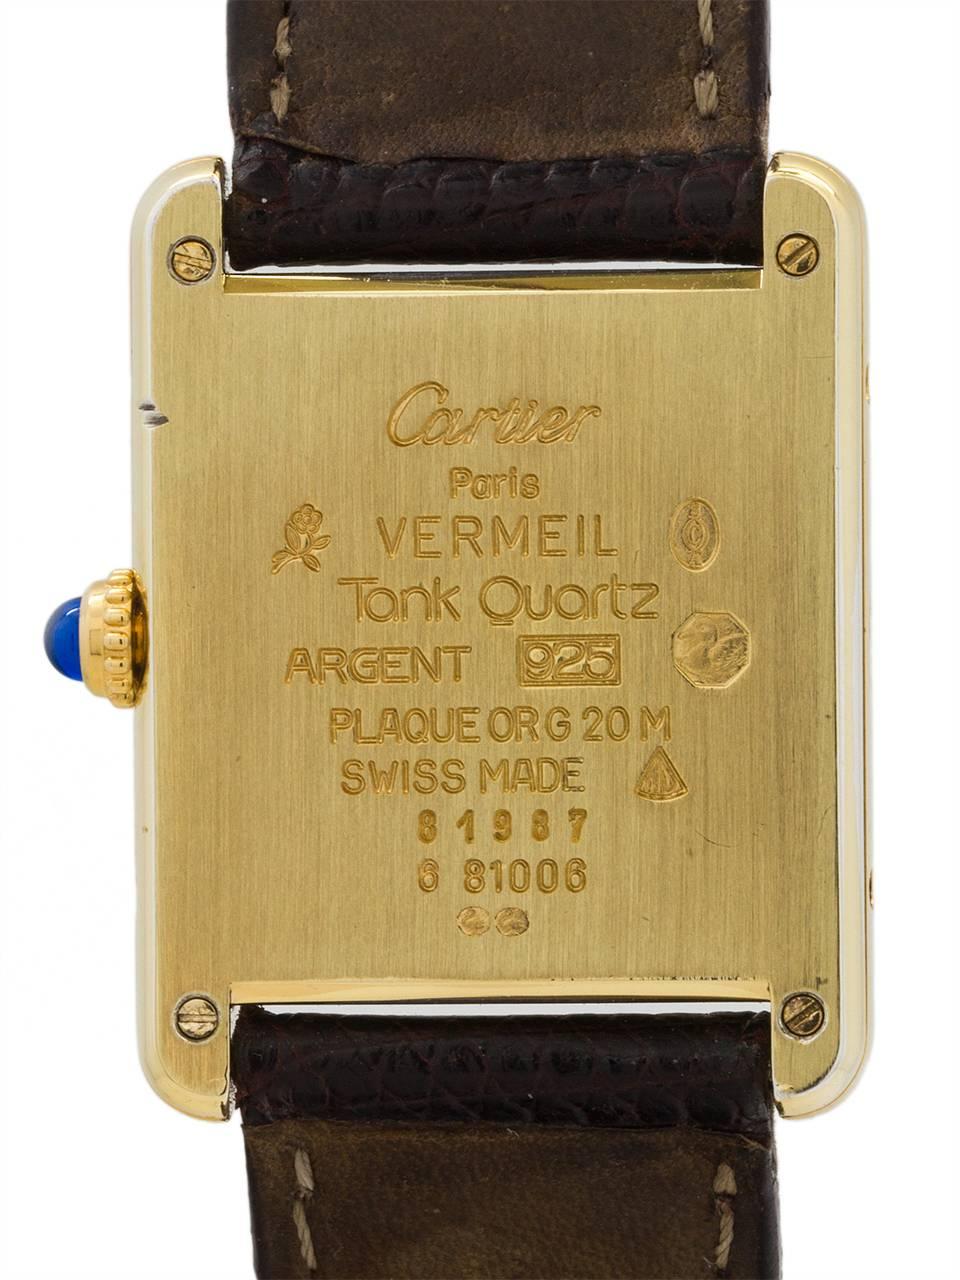 Men's Cartier Vermeil Must de Cartier Tank Louis Quartz Wristwatch, circa 1990s